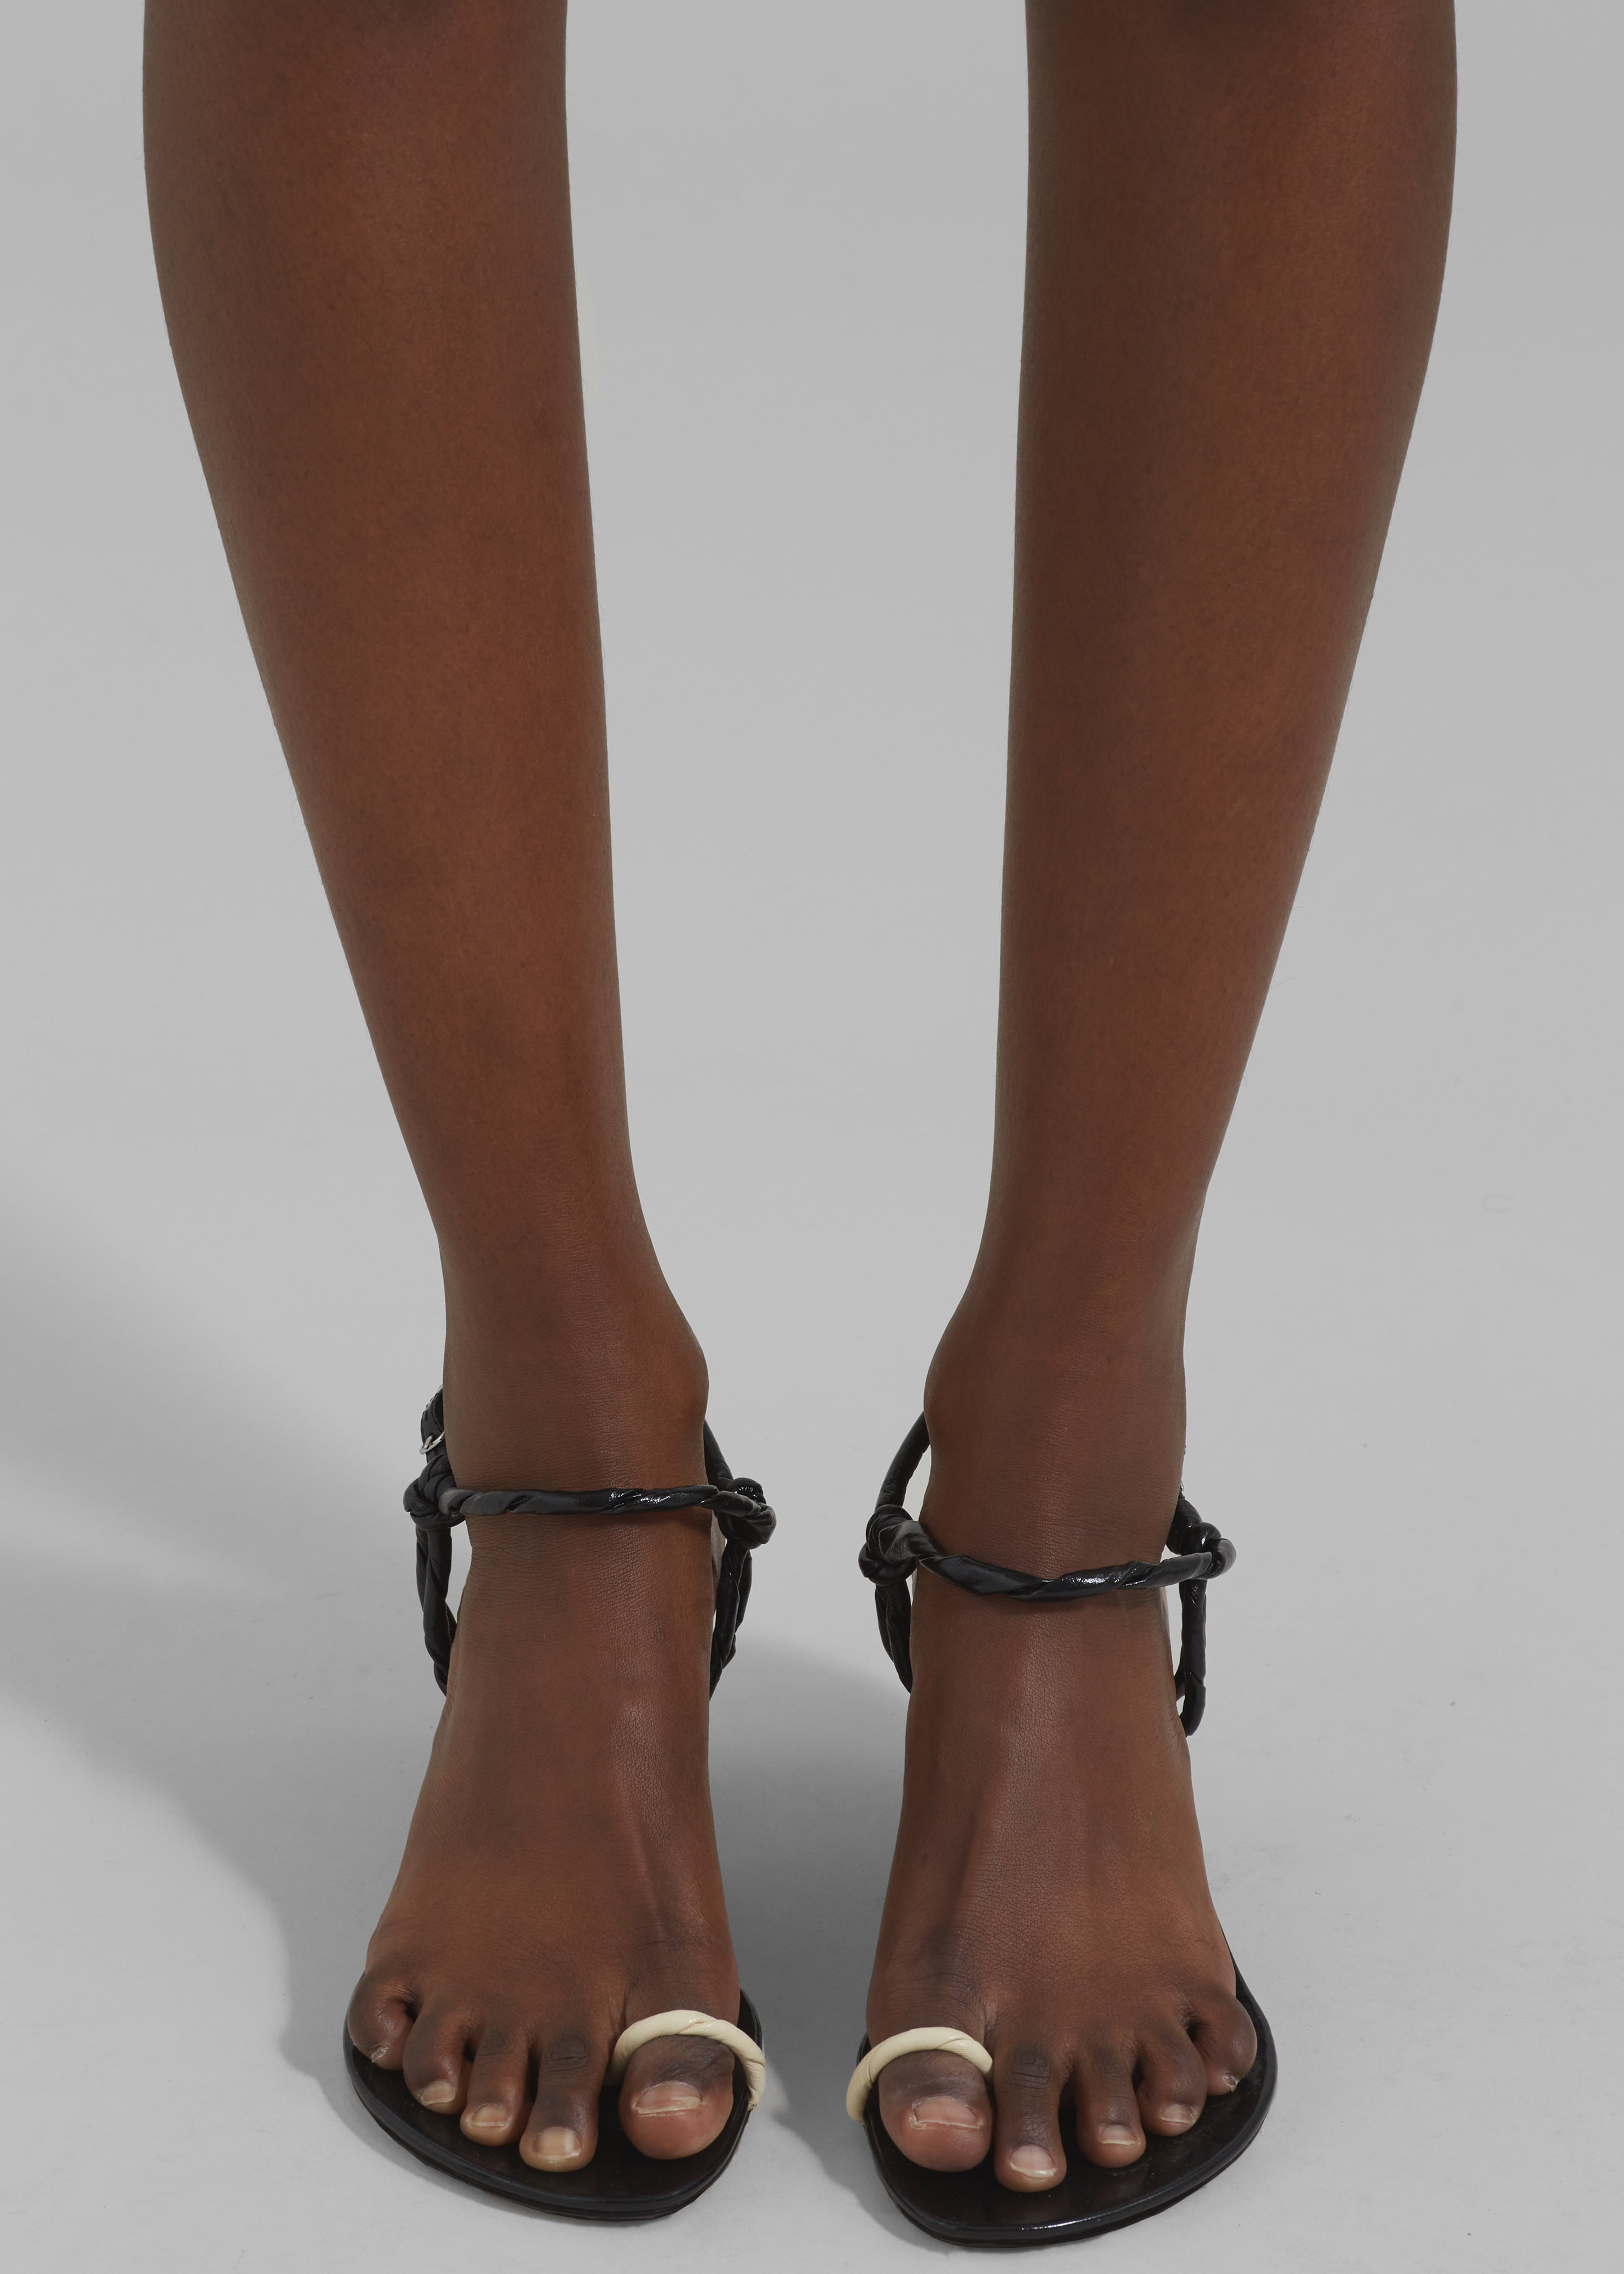 Proenza Schouler Tee Toe Ring Sandals - Black/Cream - 8